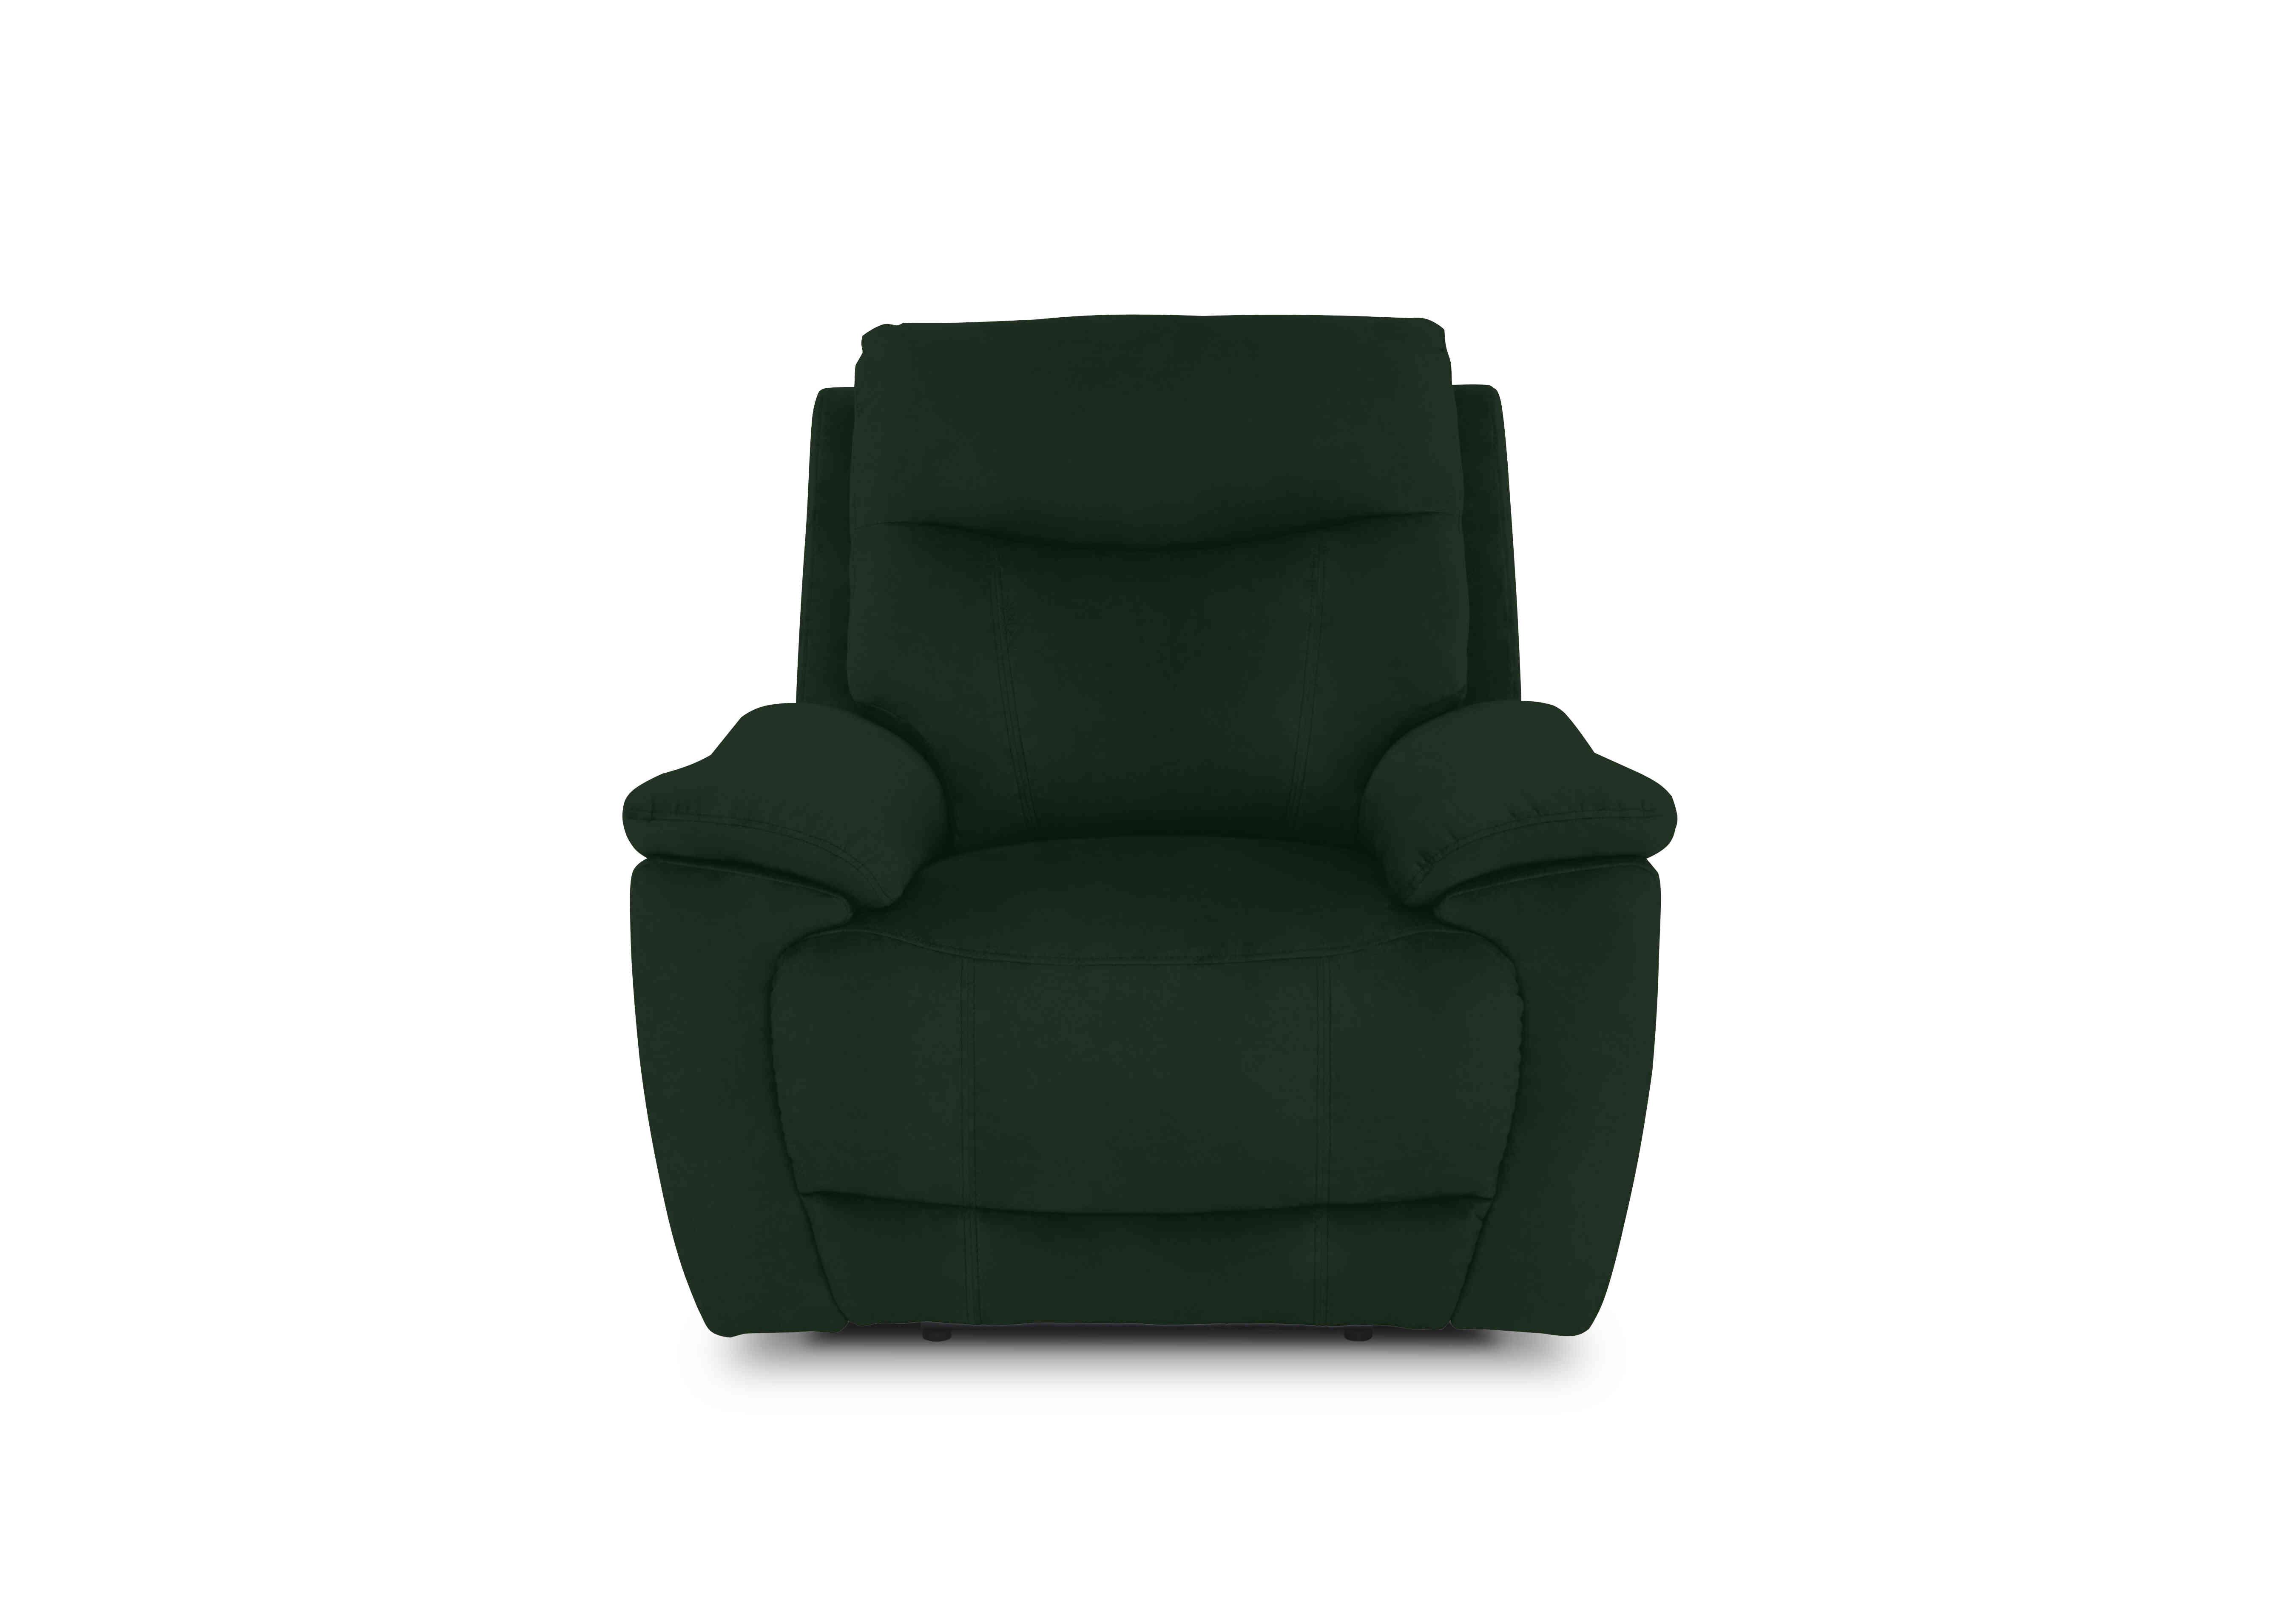 Sloane Fabric Chair in 51011 Opulence Bottle Green on Furniture Village